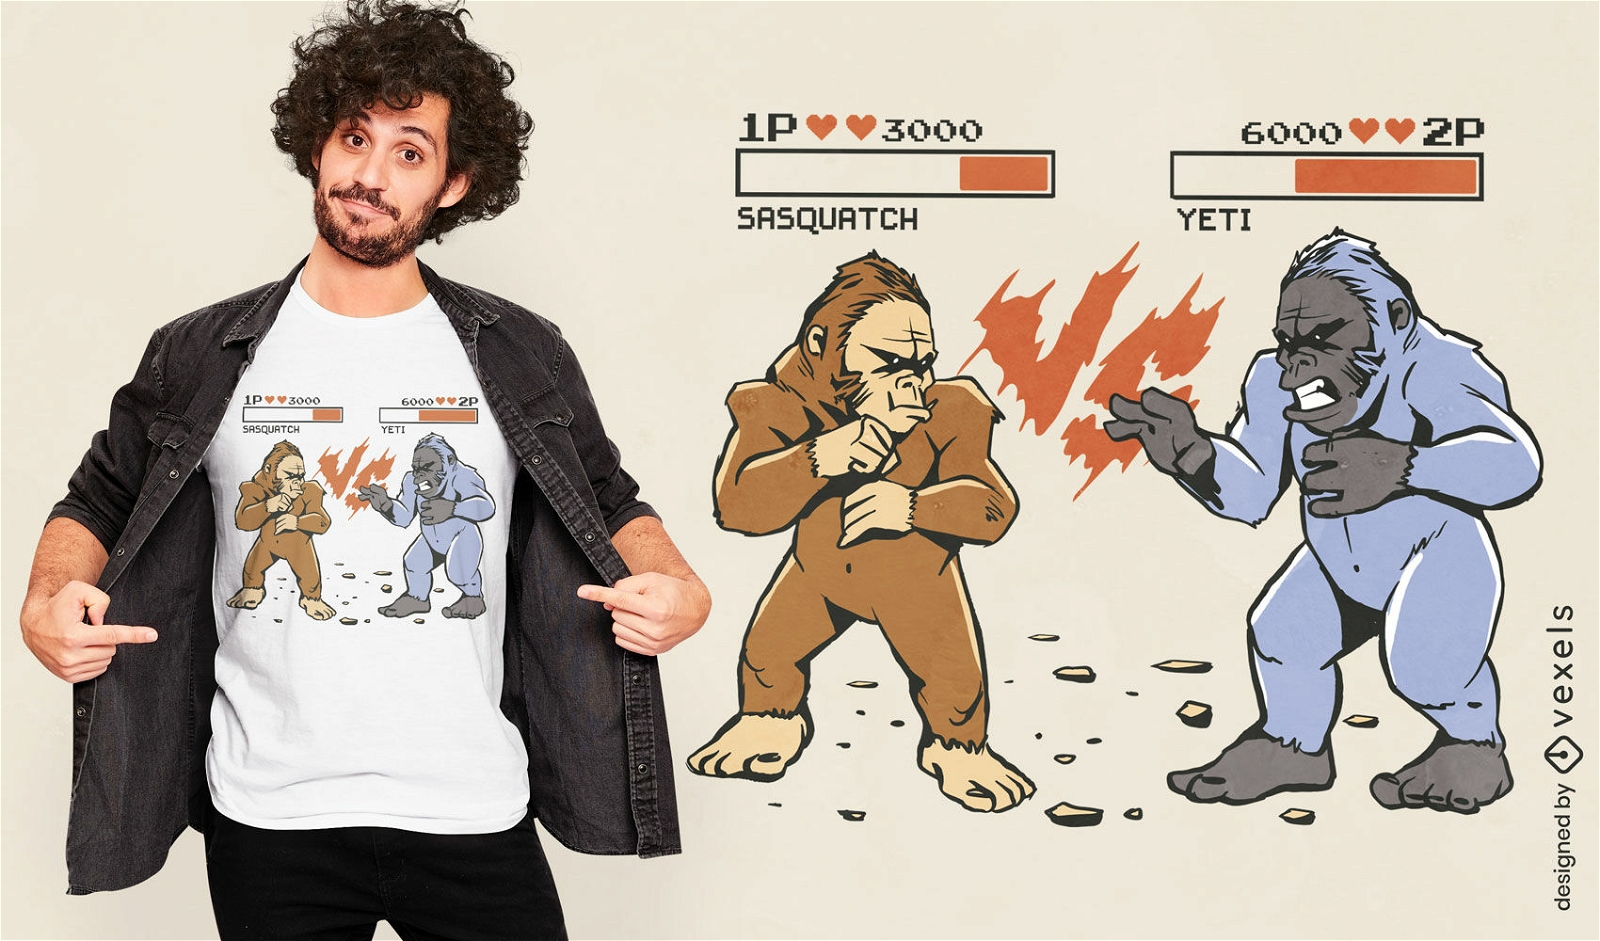 Bigfoot vs yeti videogame t-shirt design